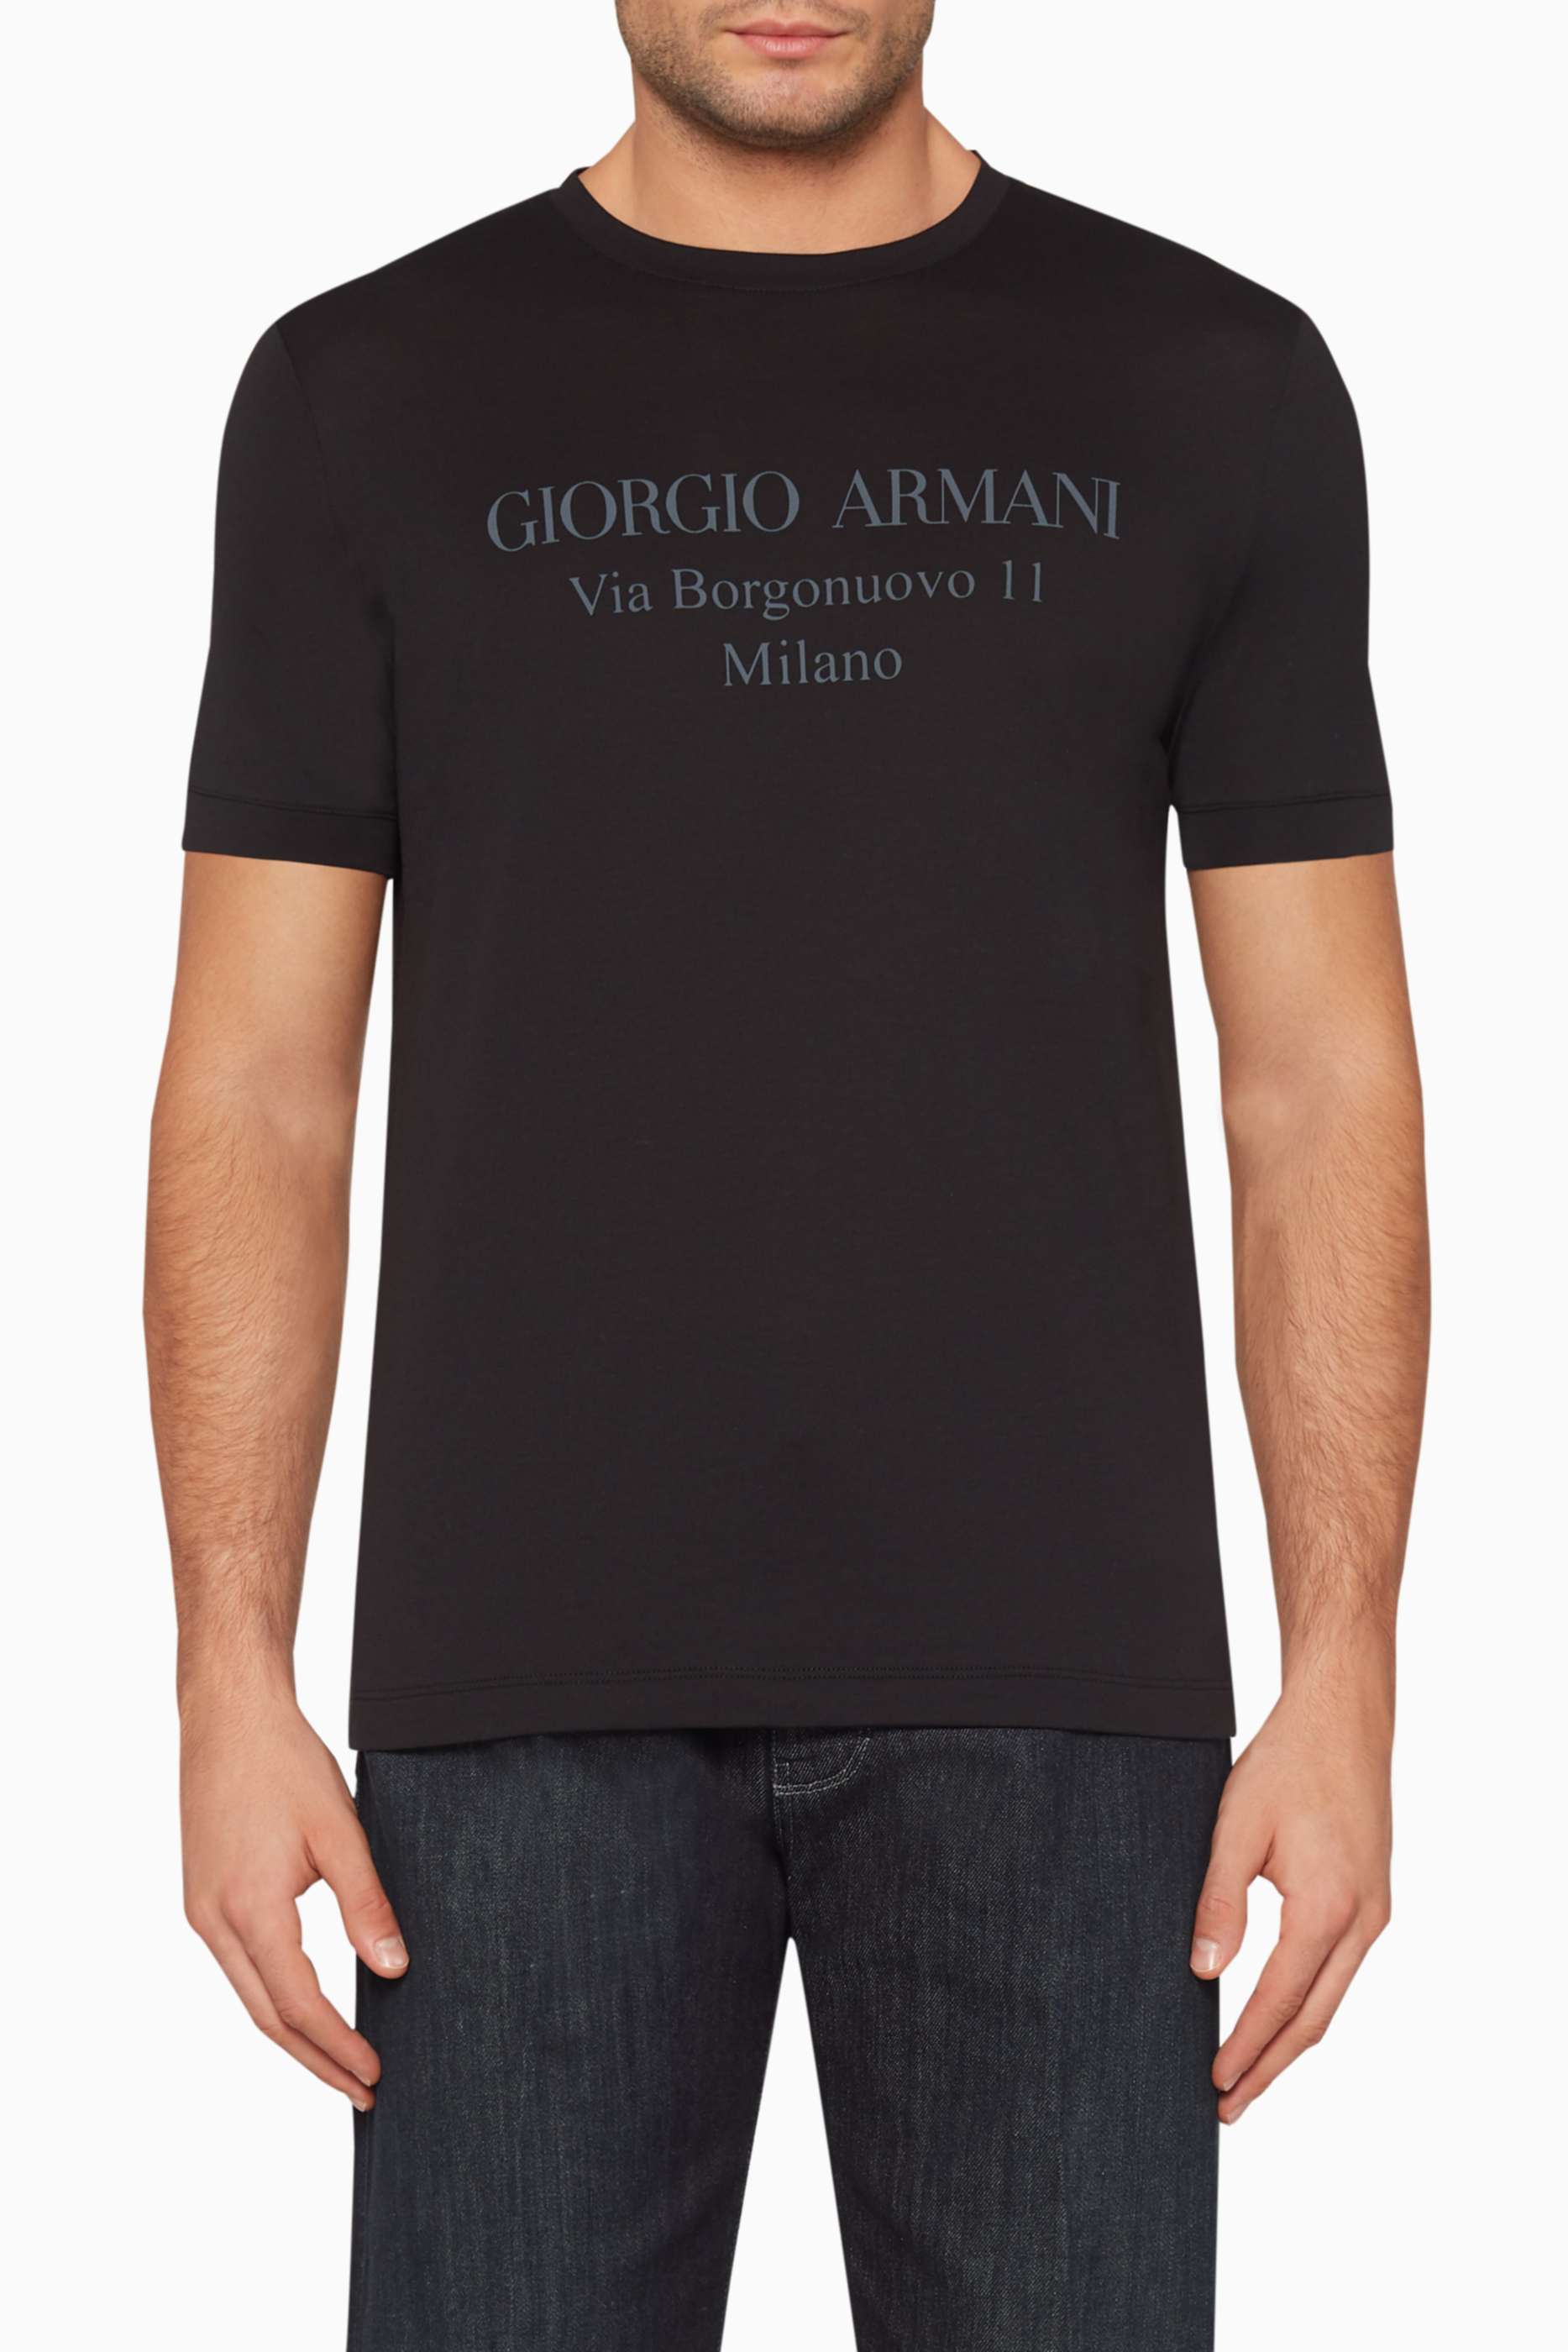 Shop Dolce & Gabbana White T-shirt with DG Logo in Cotton for Men 